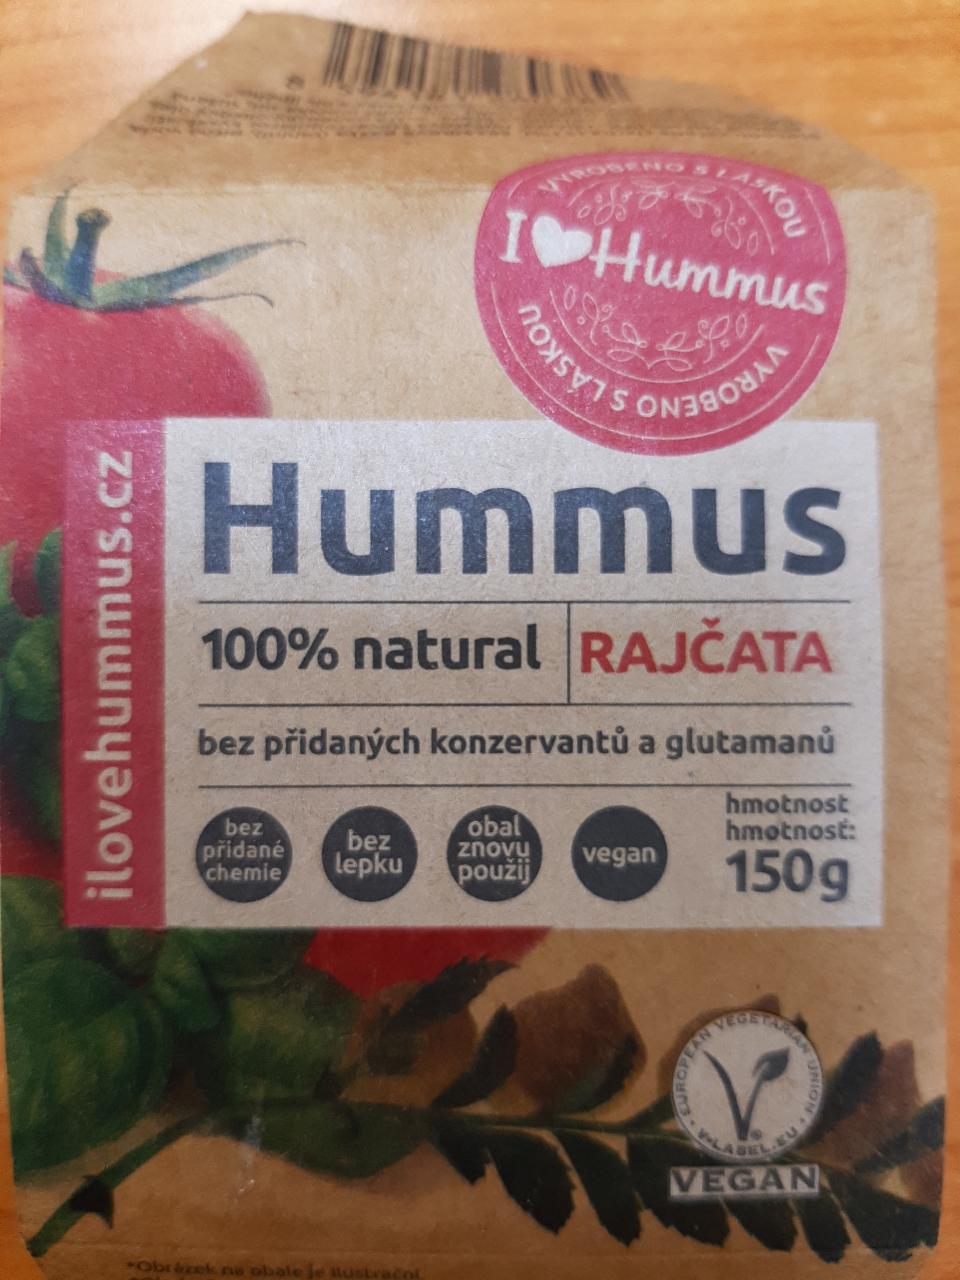 Fotografie - I love hummus rajčata 100% natural